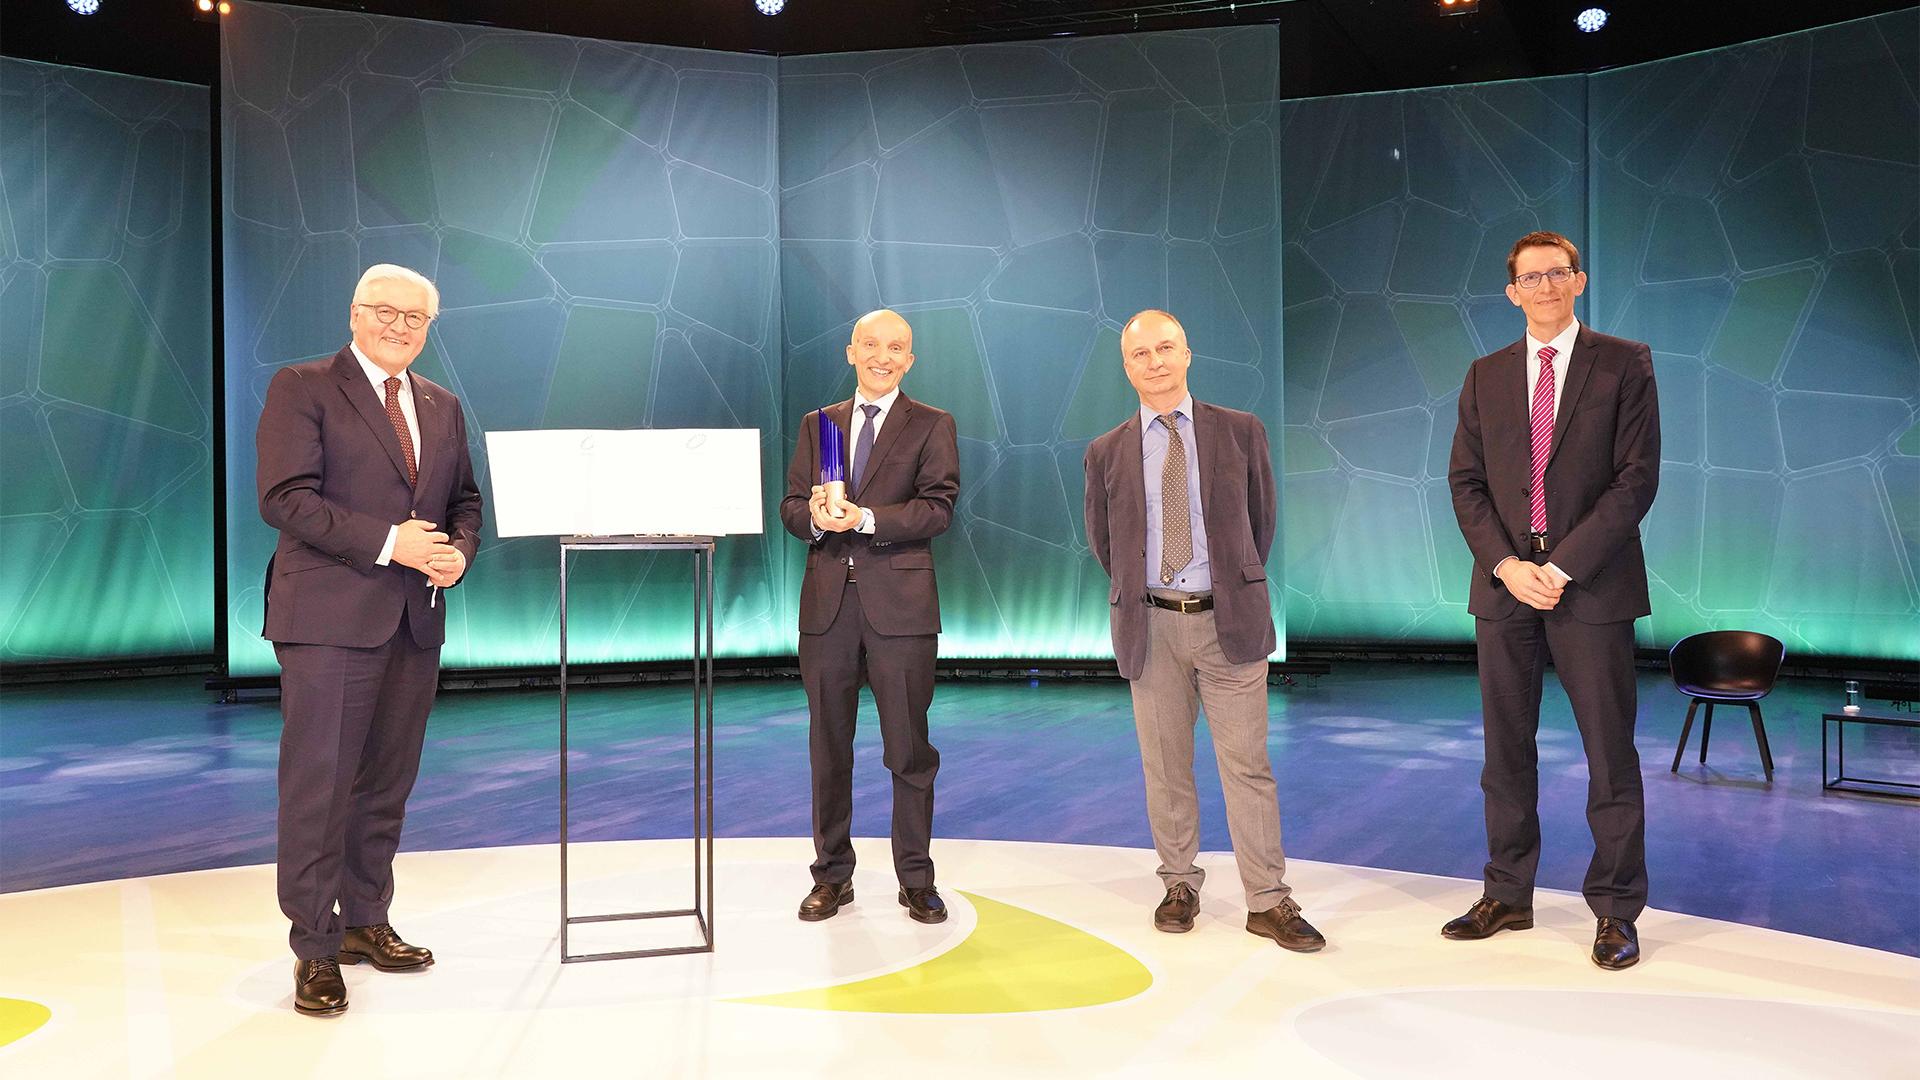 Frank Walter-Steinmeier congratulates the SMT winners of the Deutsche Zukunftspreis